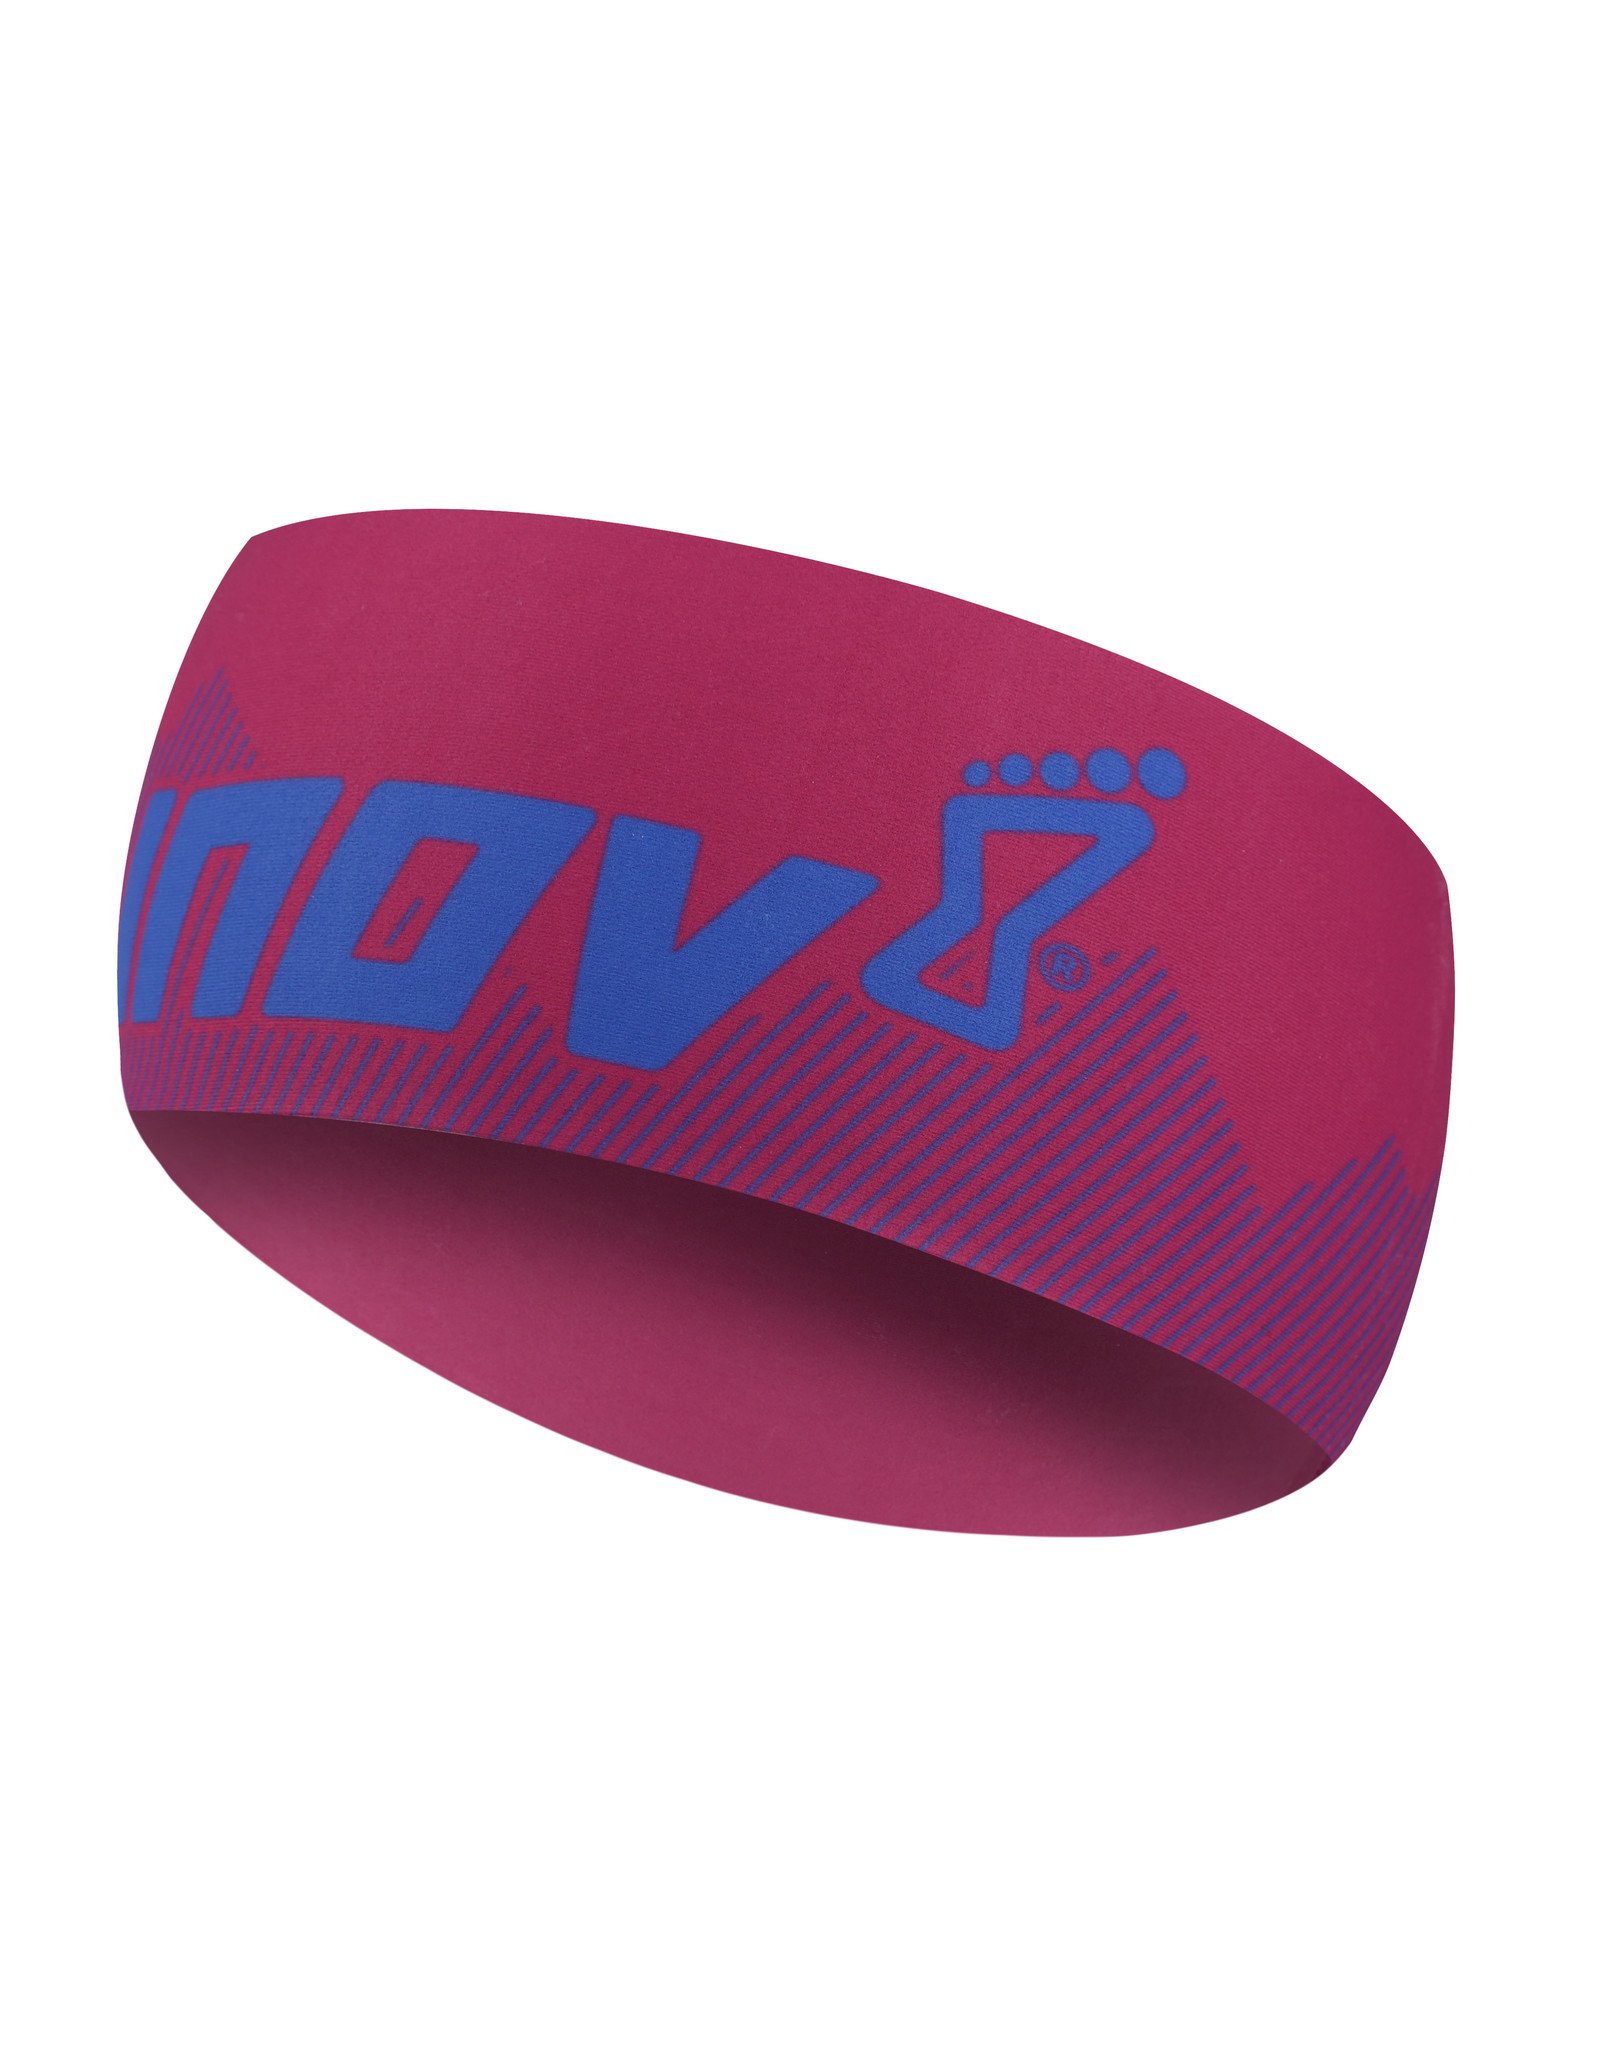 Inov-8 Race Elite Headband - Pink / Blue - M